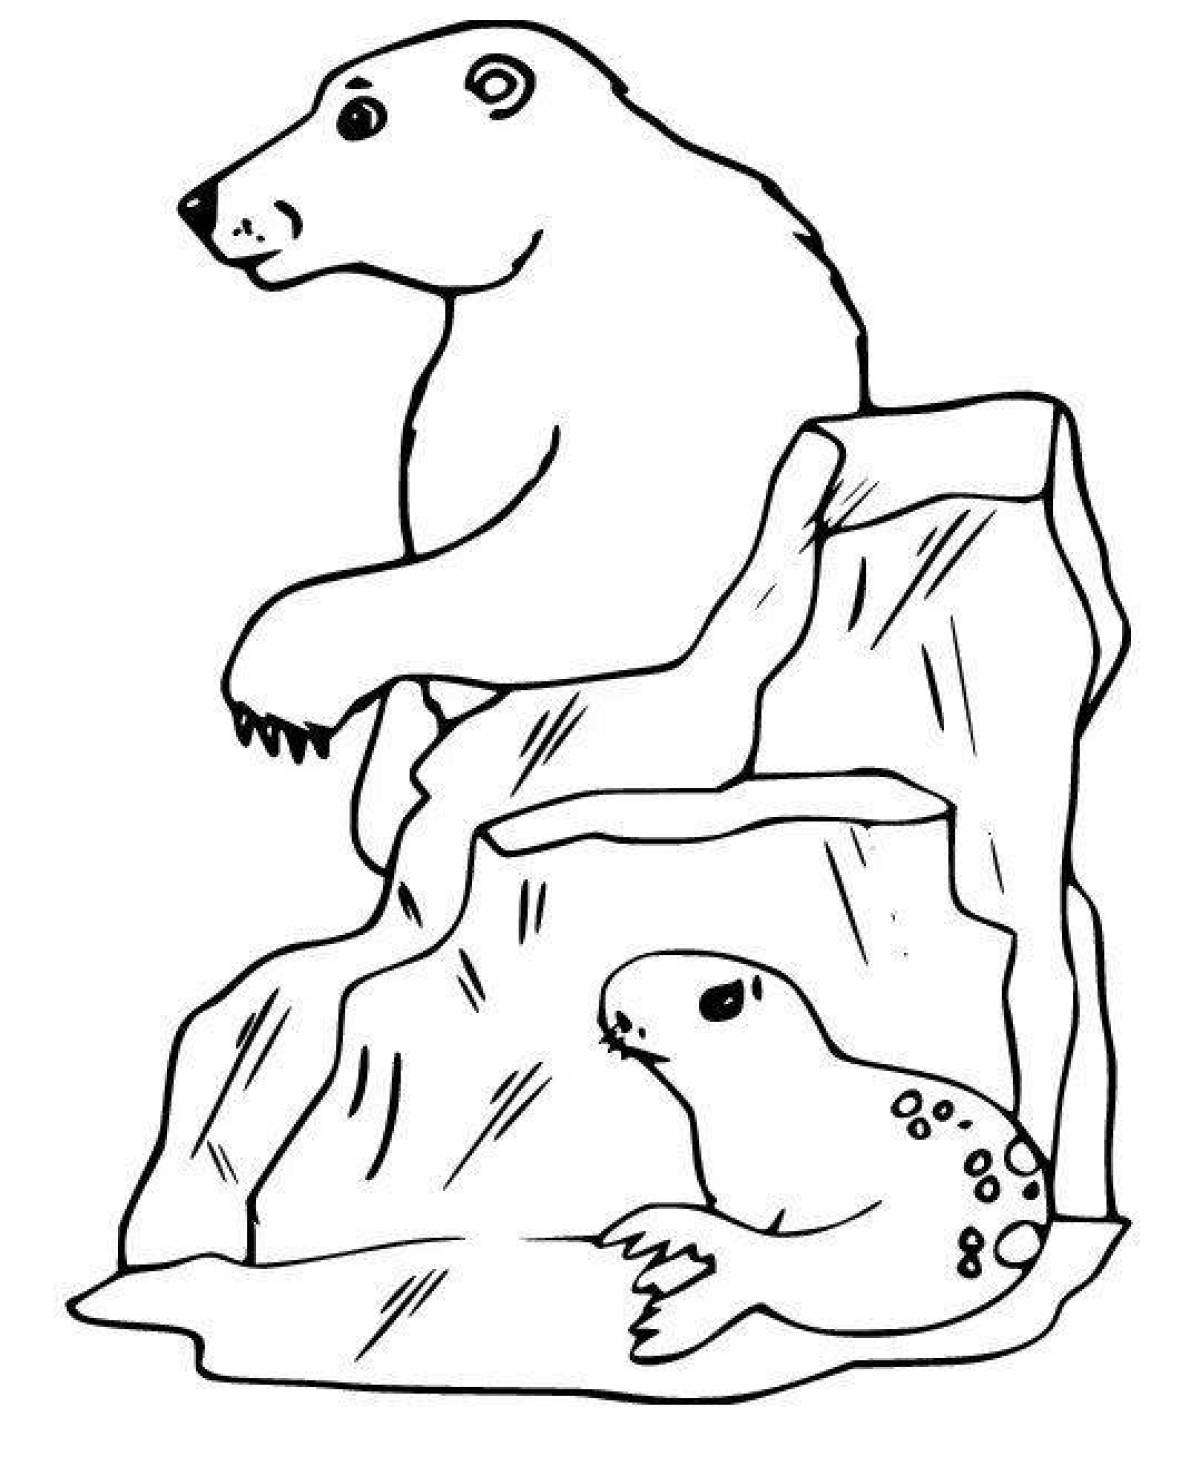 Ice polar bear coloring page